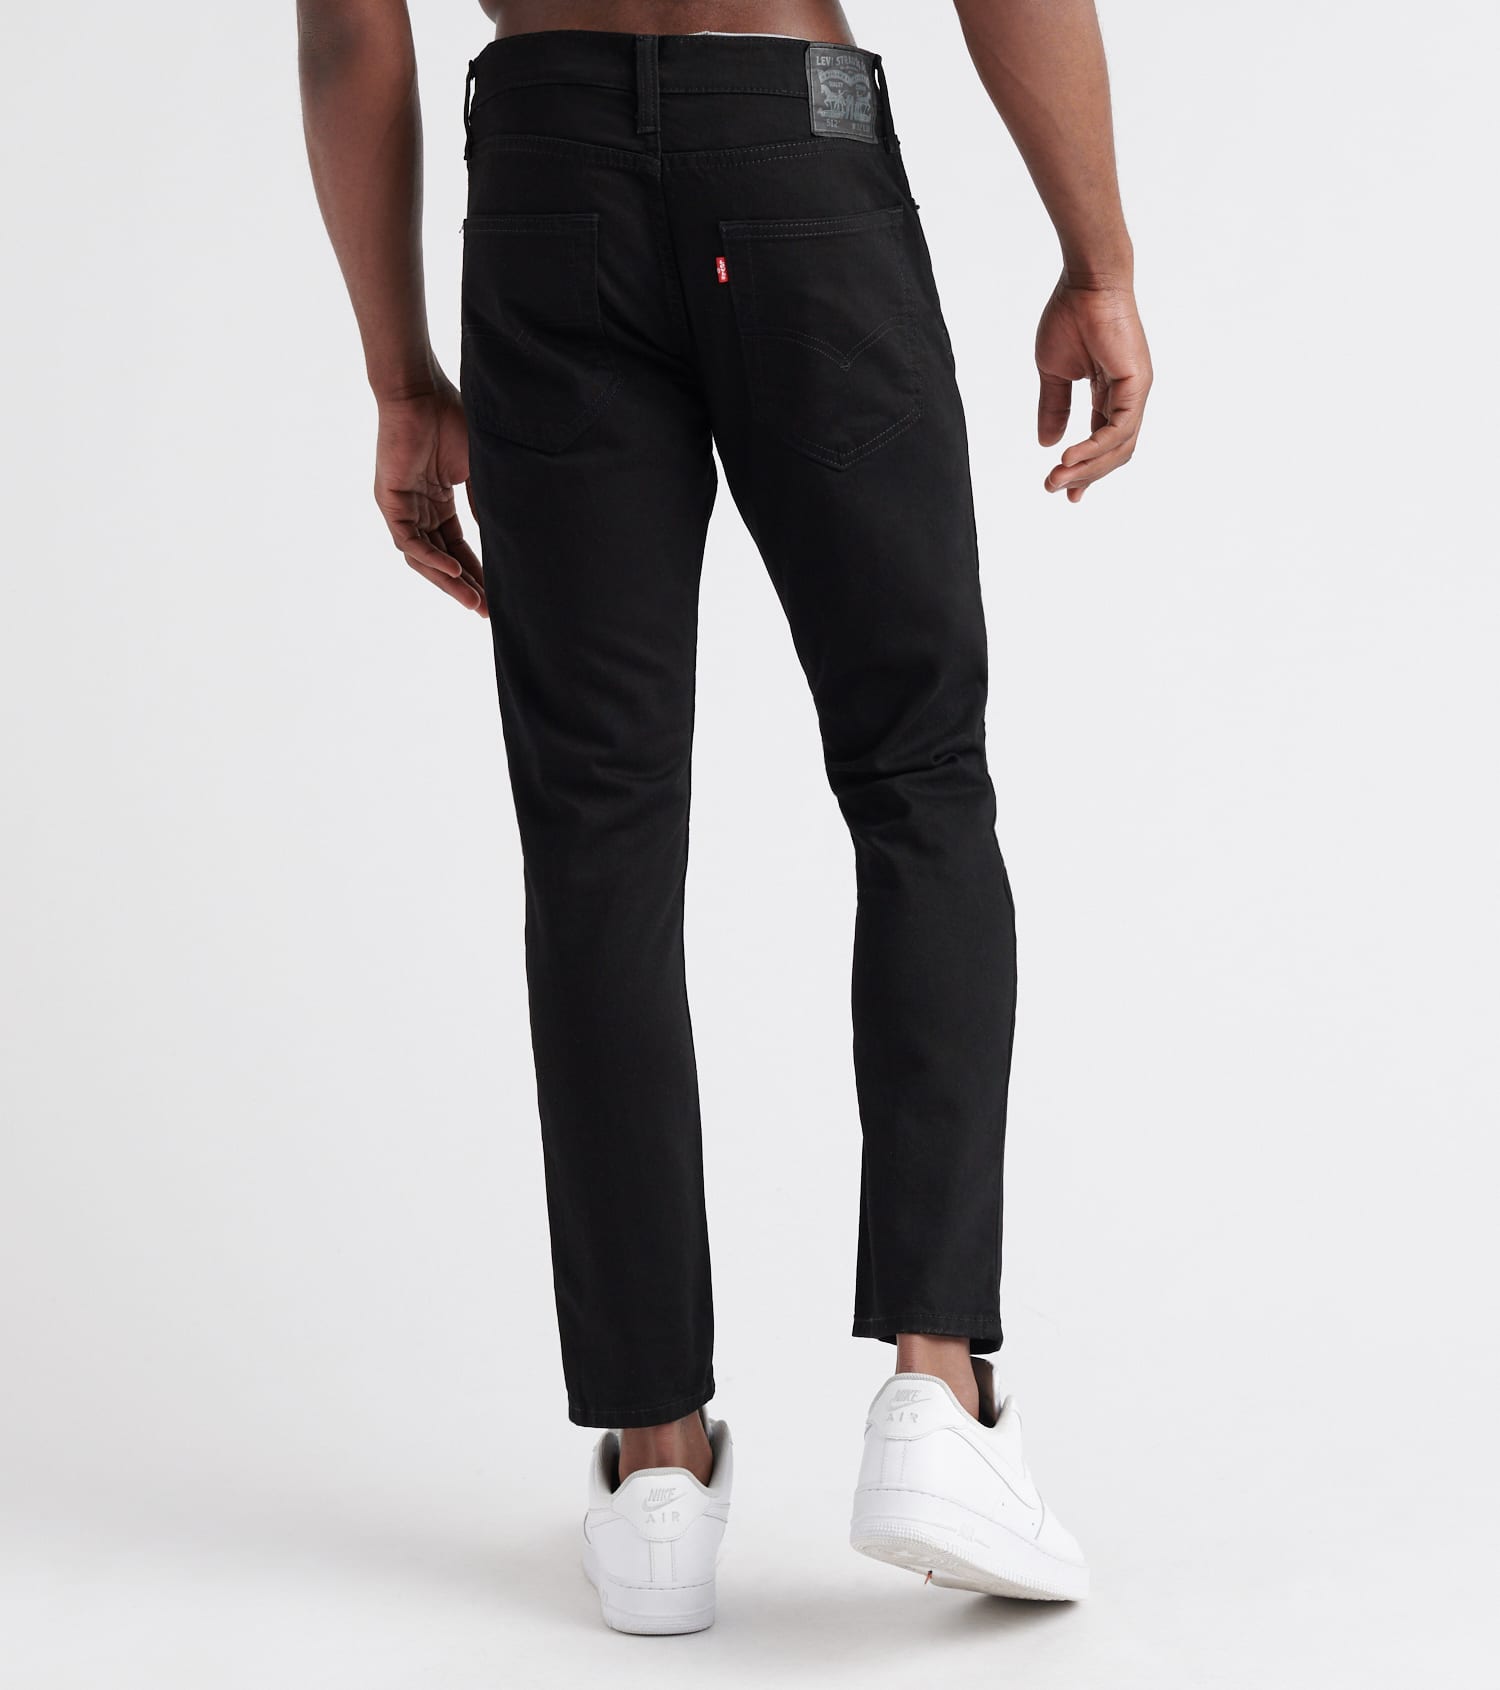 Levis 512 Slim Tapered Jeans (Black) - 28833-0049 | Jimmy Jazz